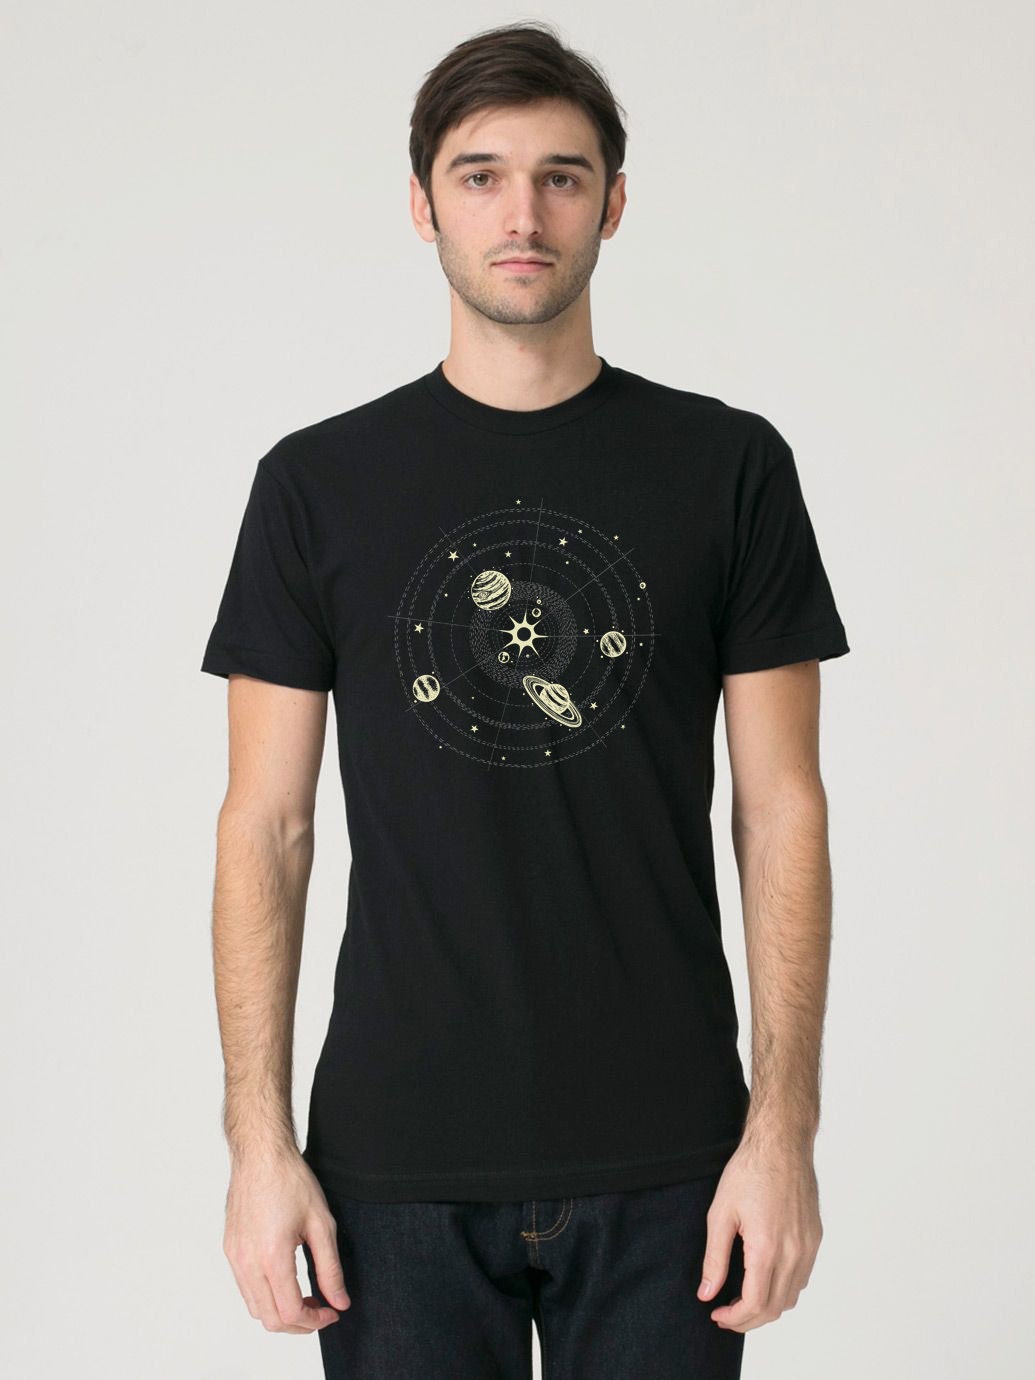 Kids Space Shirt Glow in the Dark Solar System Shirt Rad - Etsy